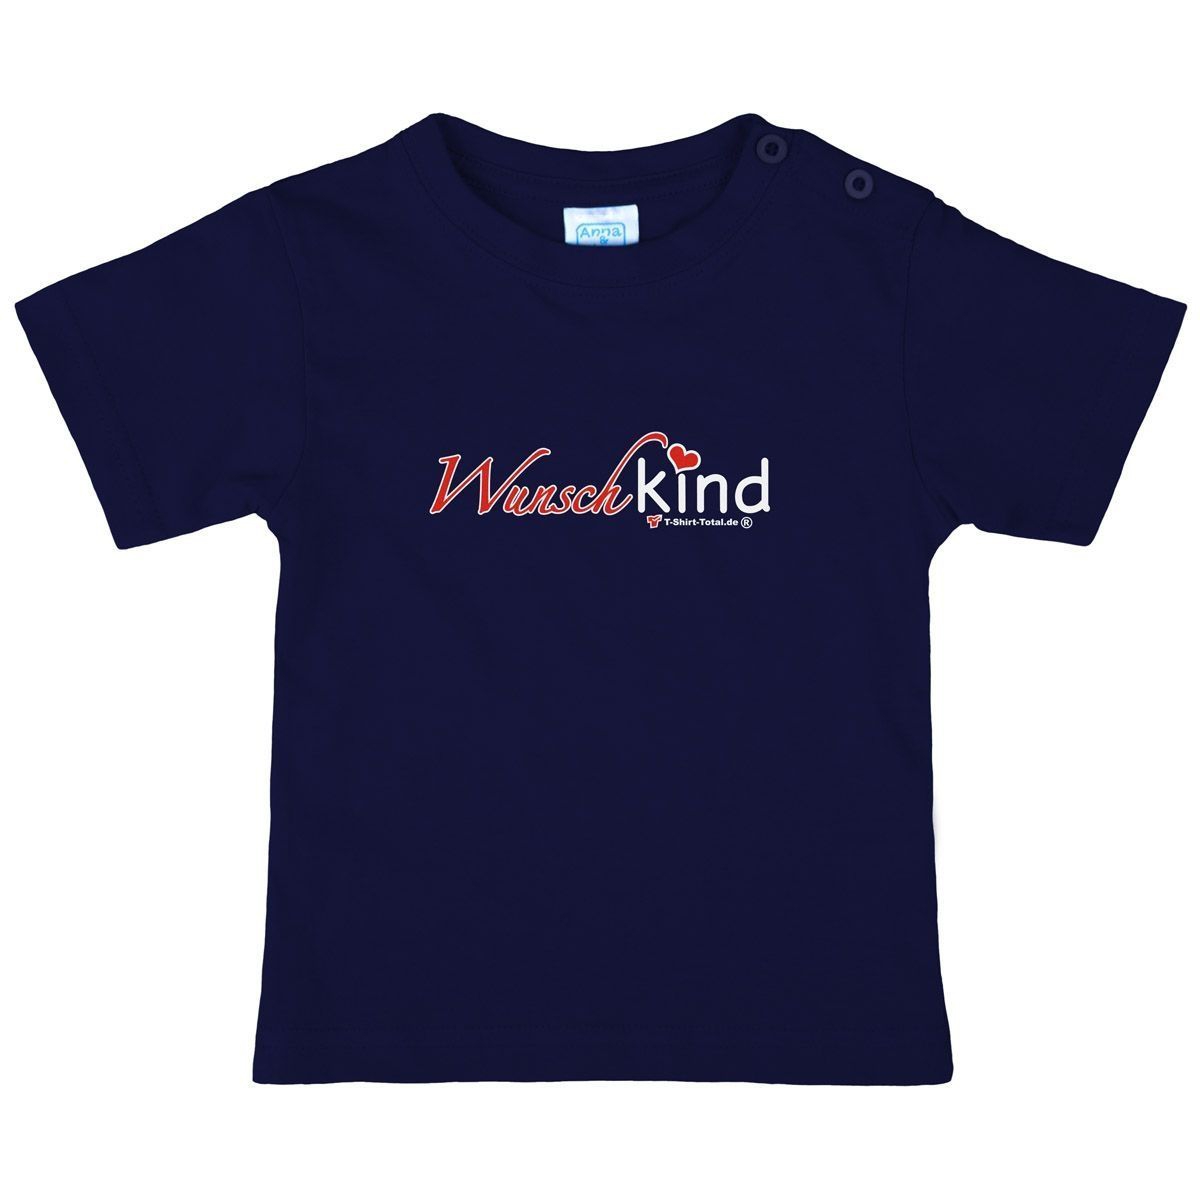 Wunschkind Kinder T-Shirt navy 56 / 62